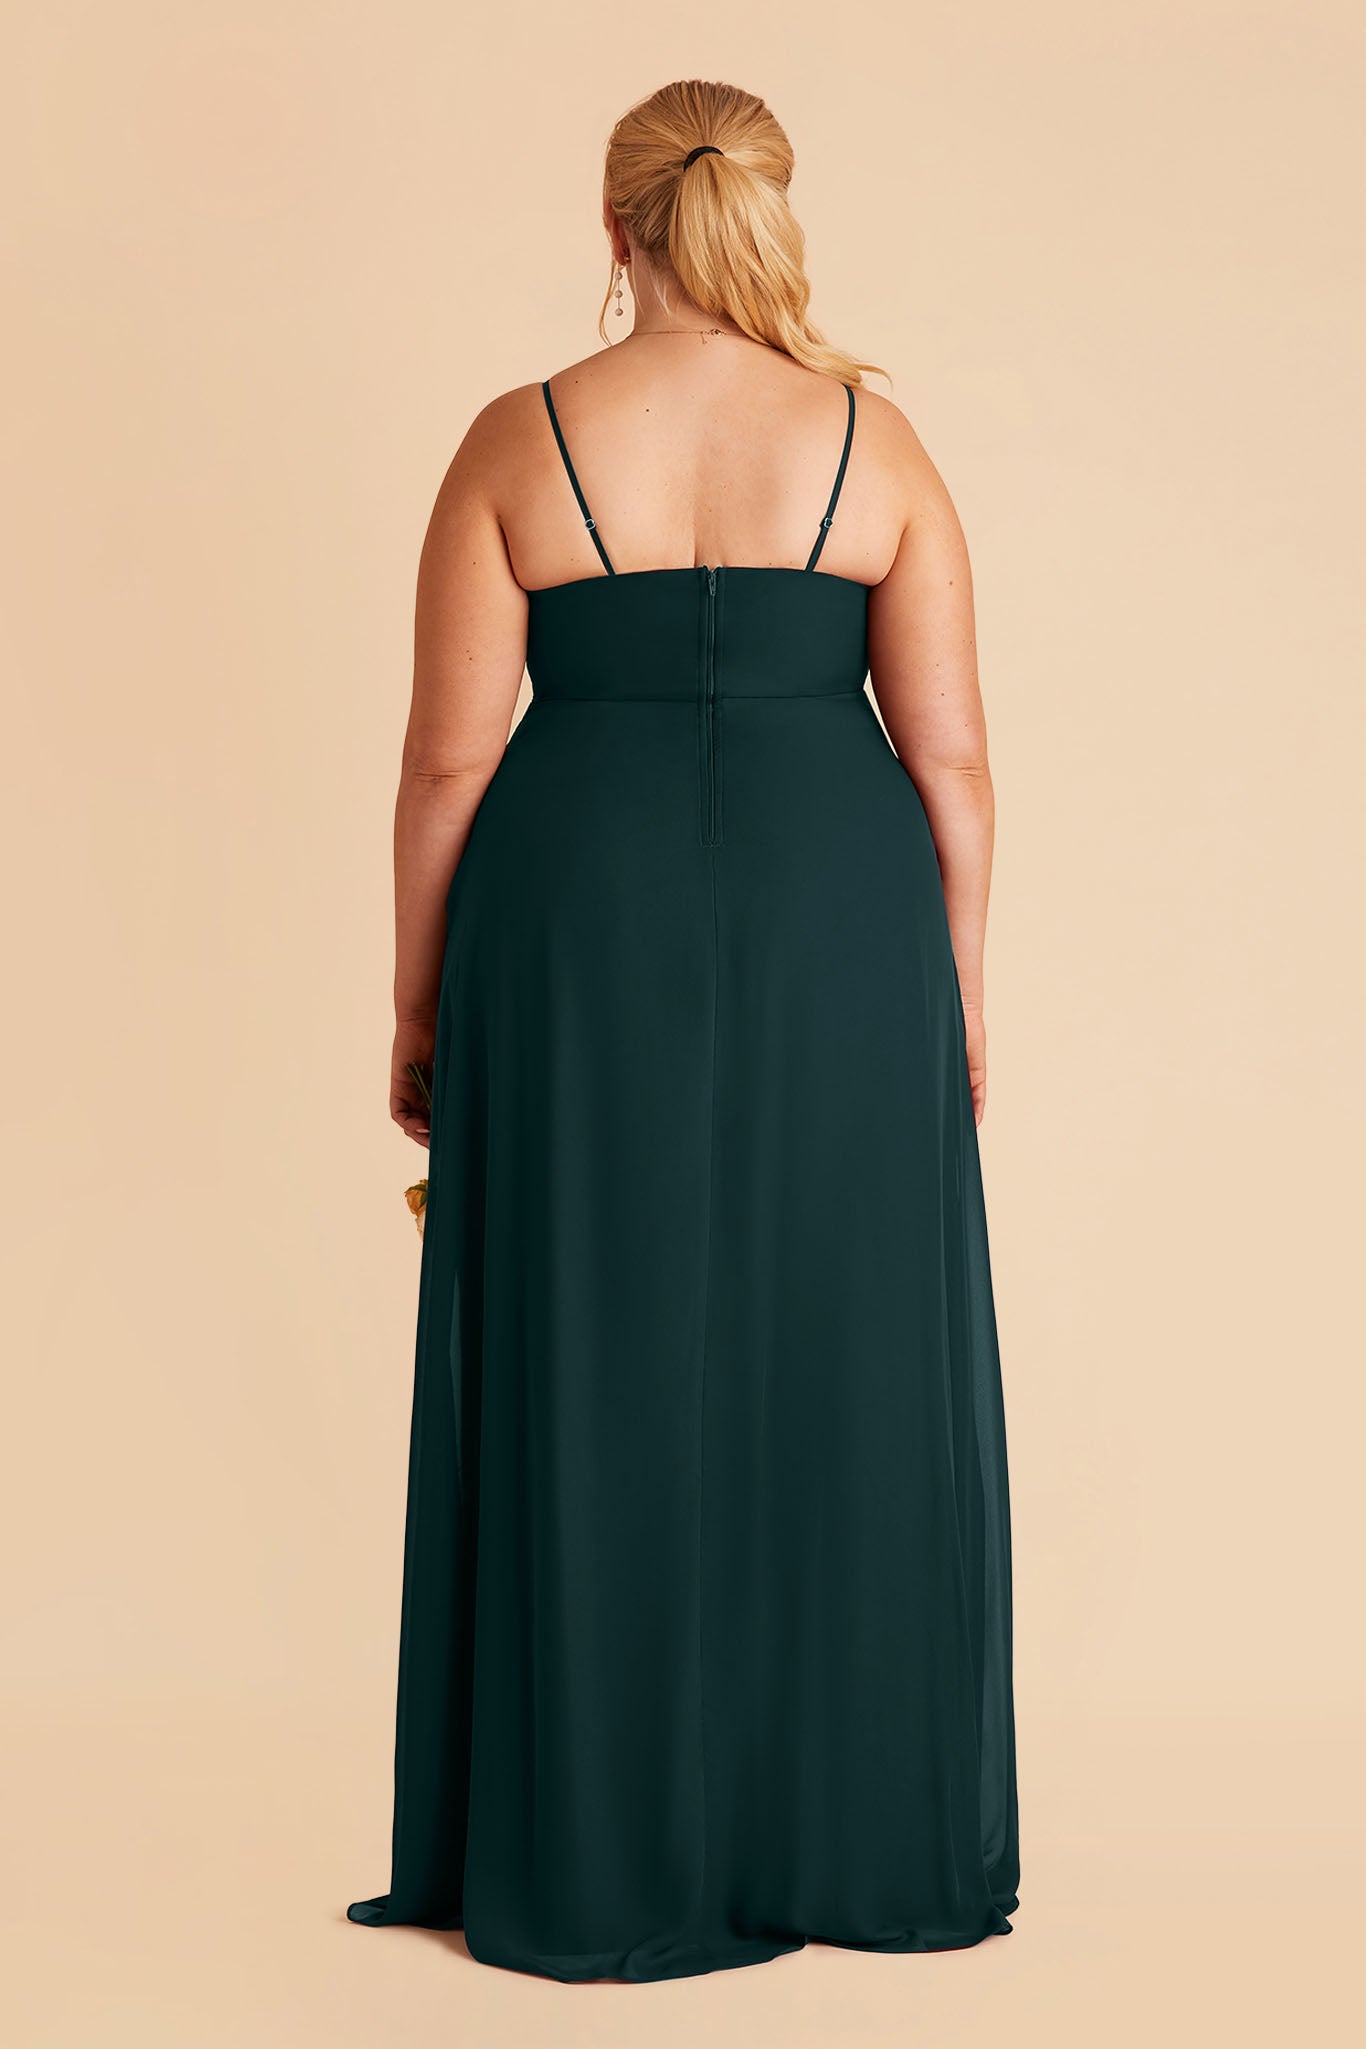 Emerald Winnie Convertible Chiffon Dress by Birdy Grey